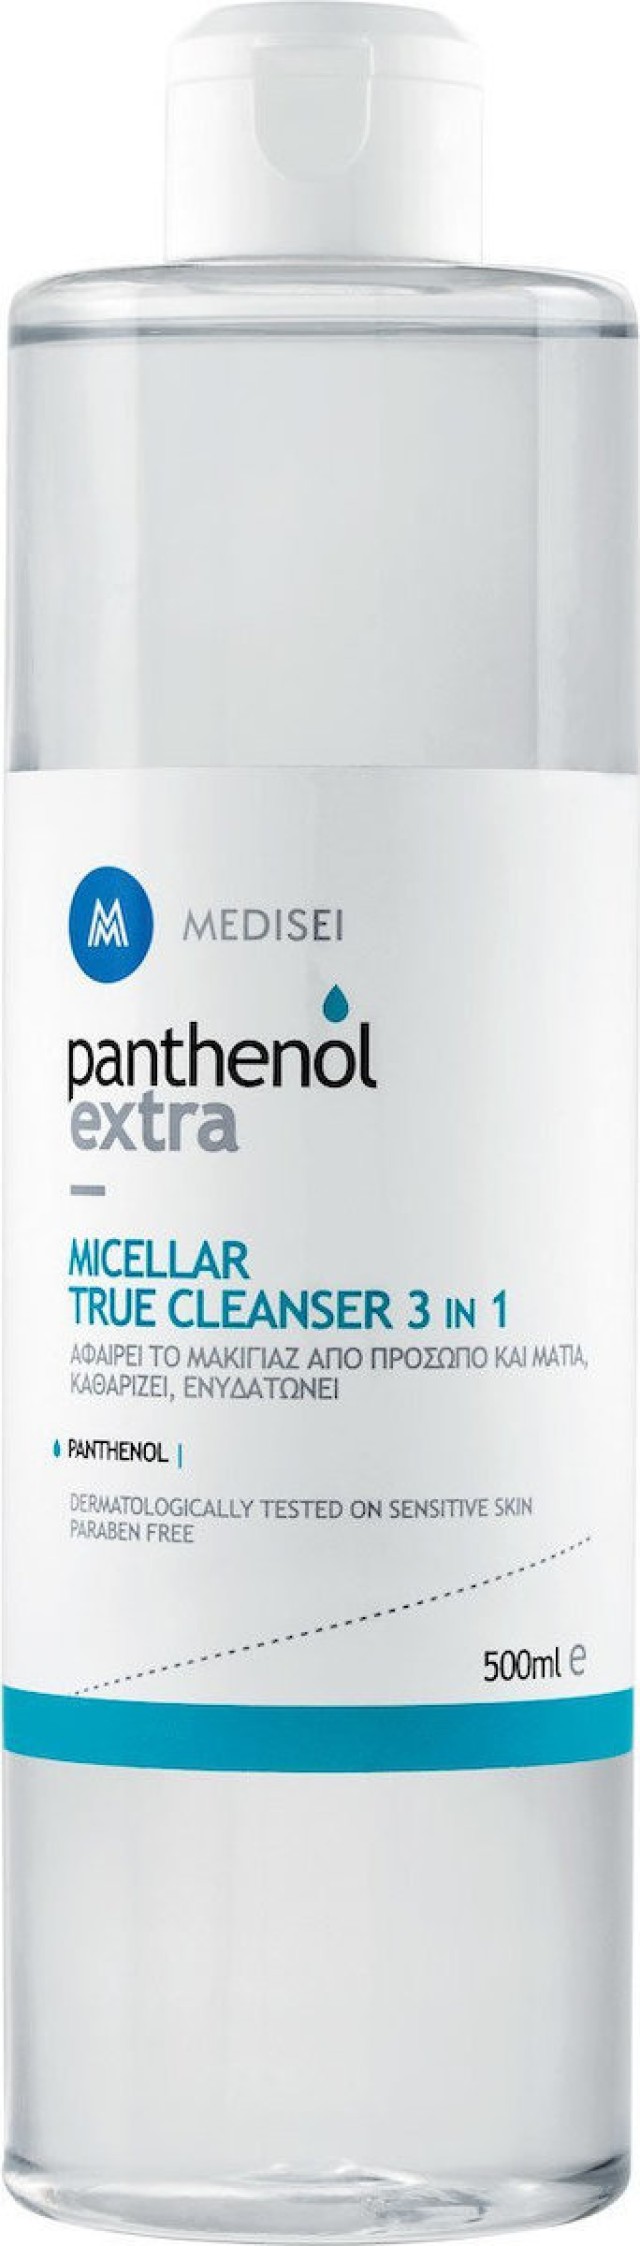 Medisei Panthenol Extra Micellar True Cleanser 3 in 1 Καθαριστική Λοσιόν Προσώπου & Ματιών 500ml